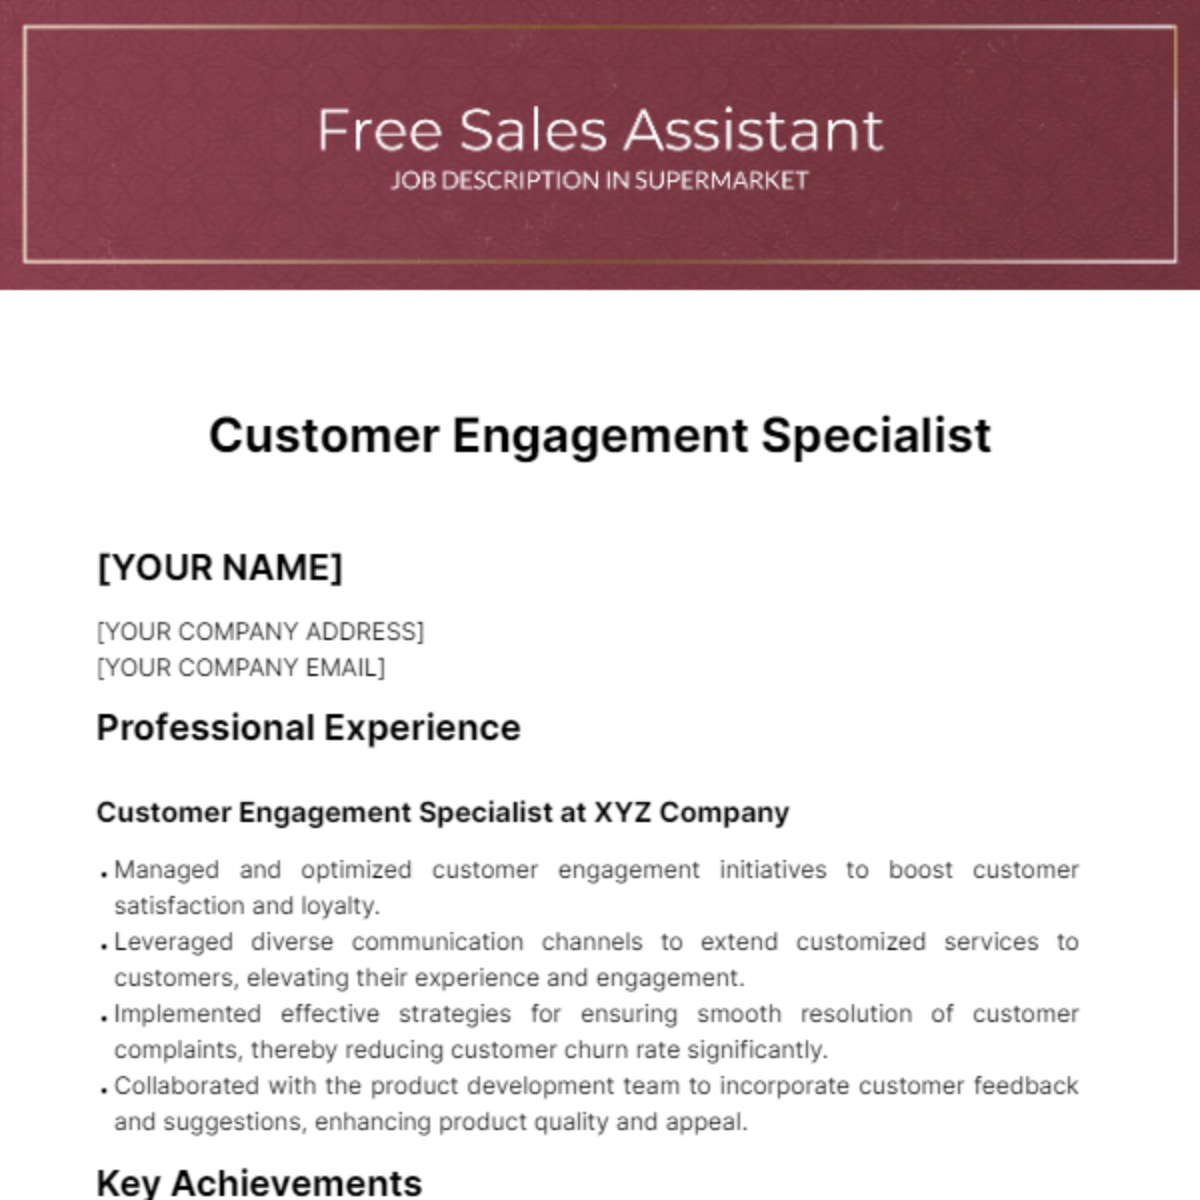 Free Sales Assistant Job Description in Supermarket Template